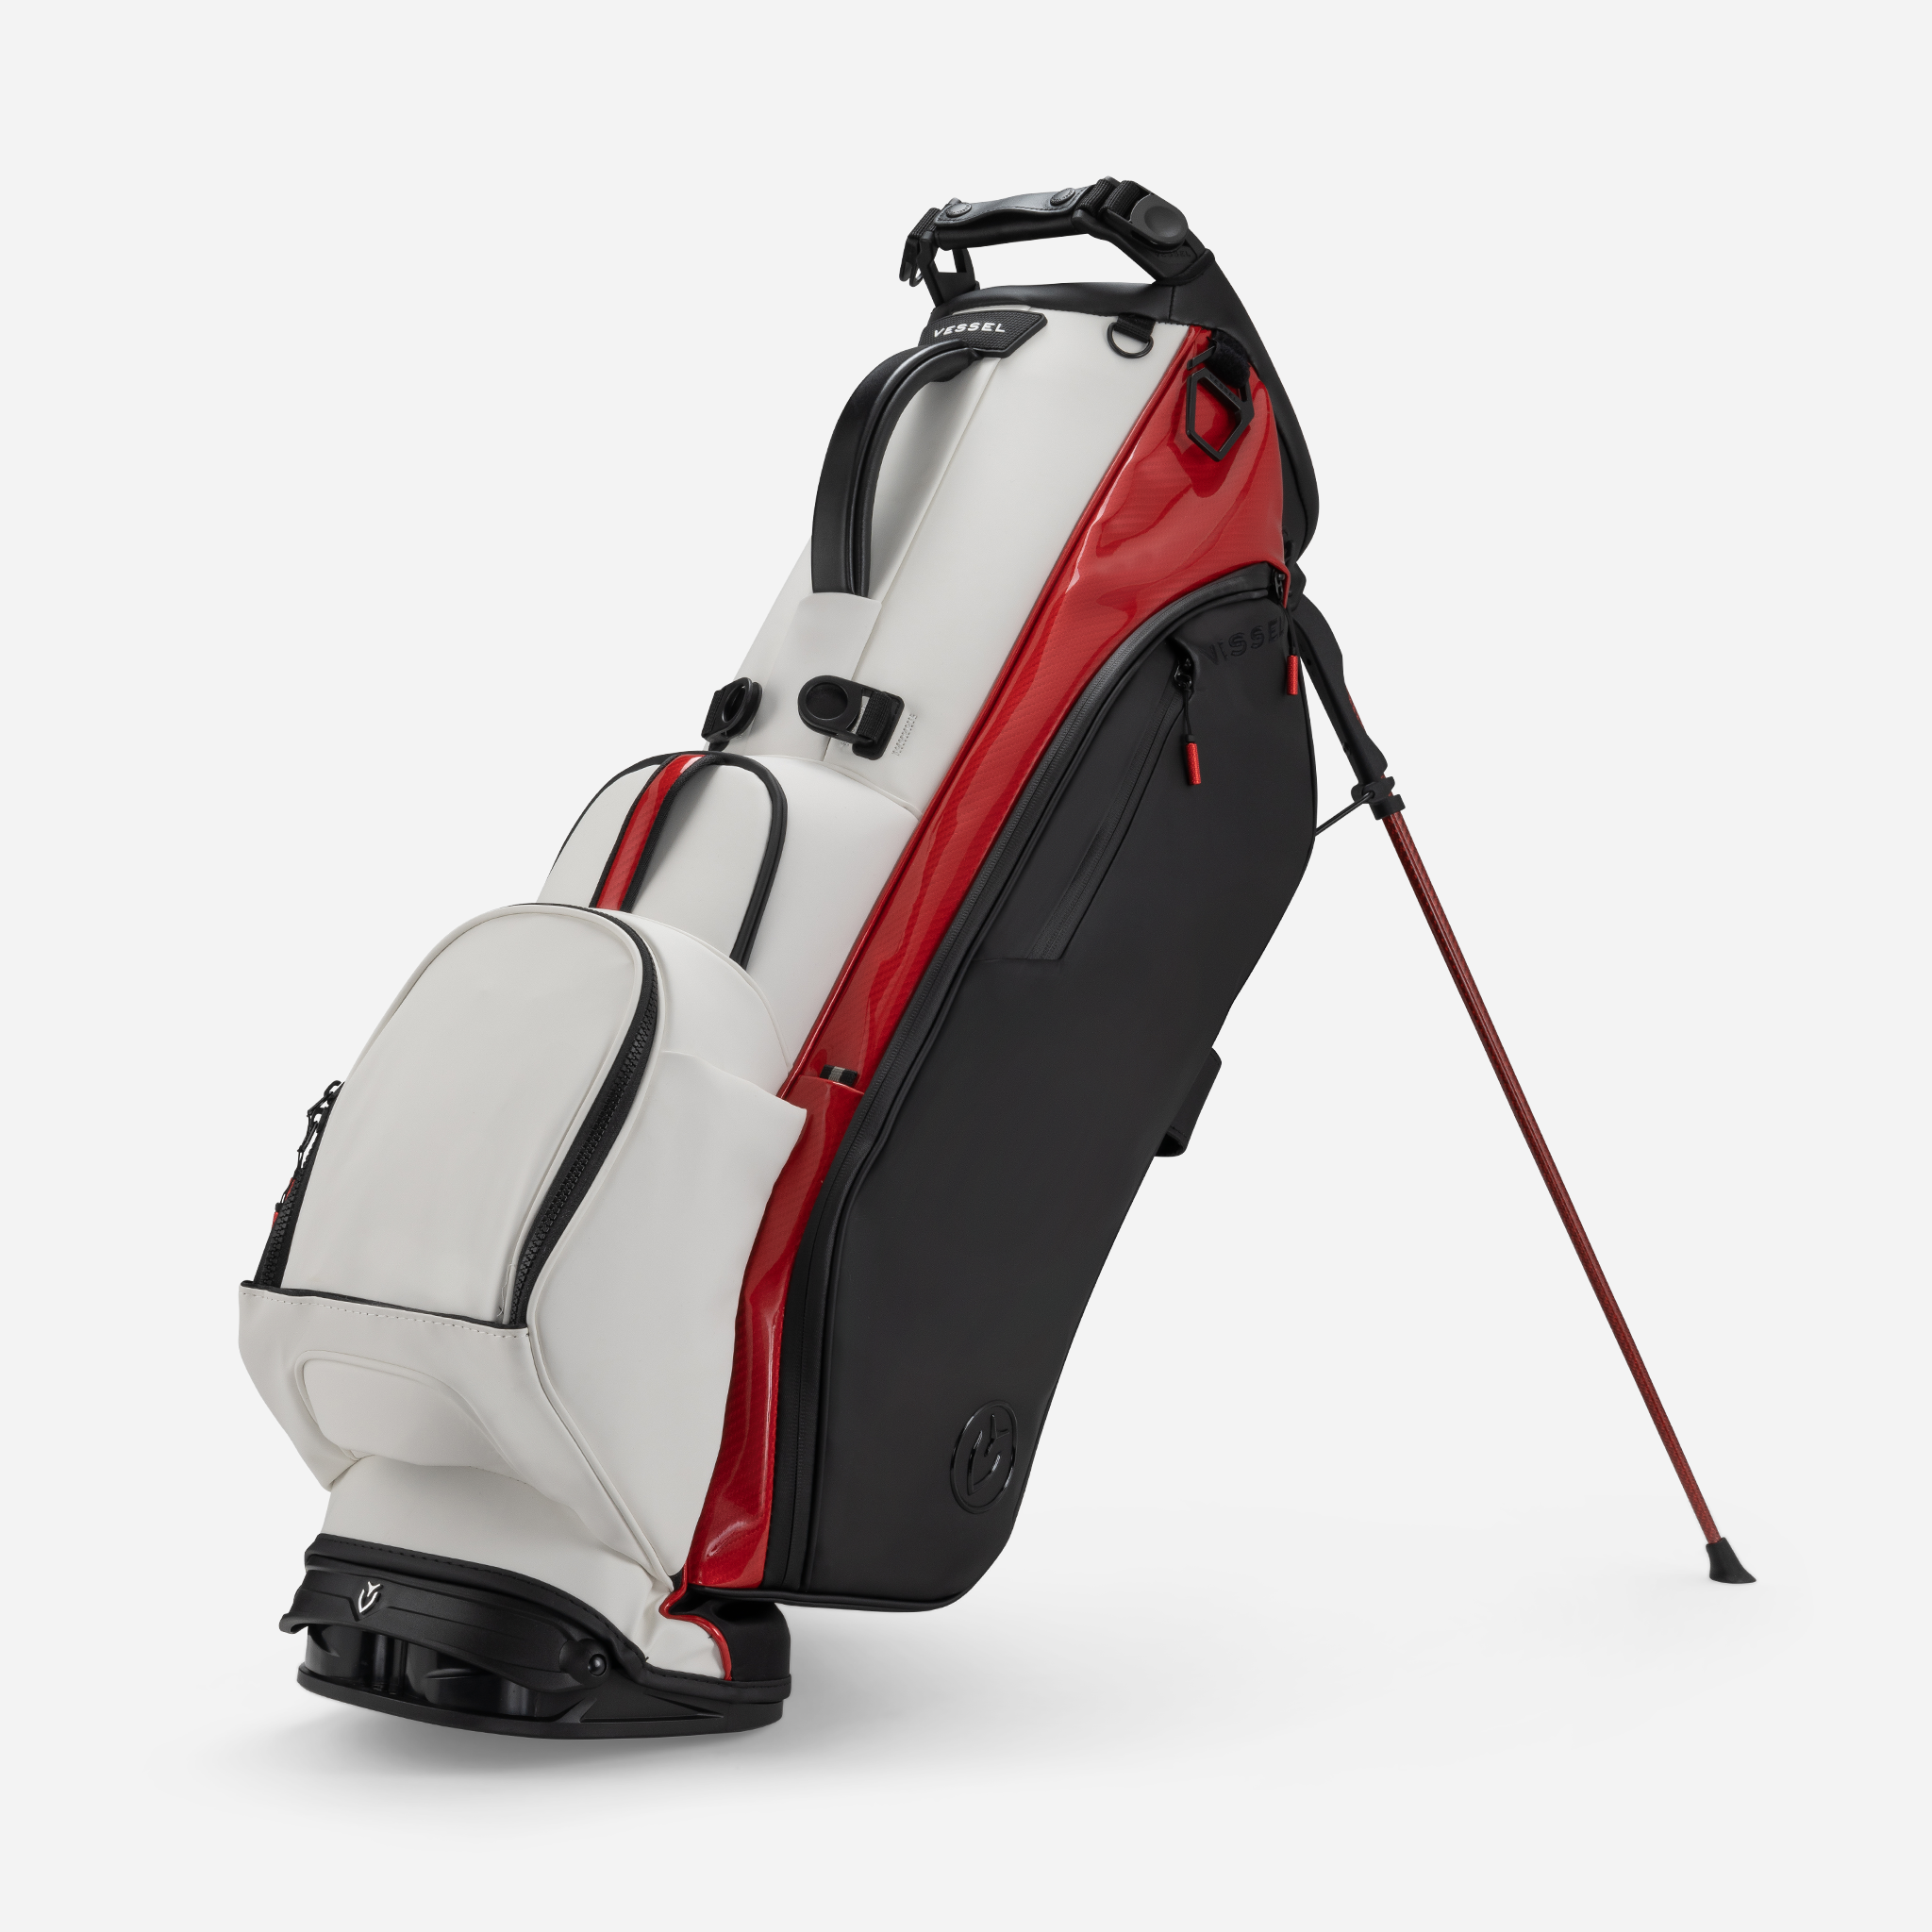 Jones Sports Co. Trouper R Stand Bag, Golf Equipment: Clubs, Balls, Bags